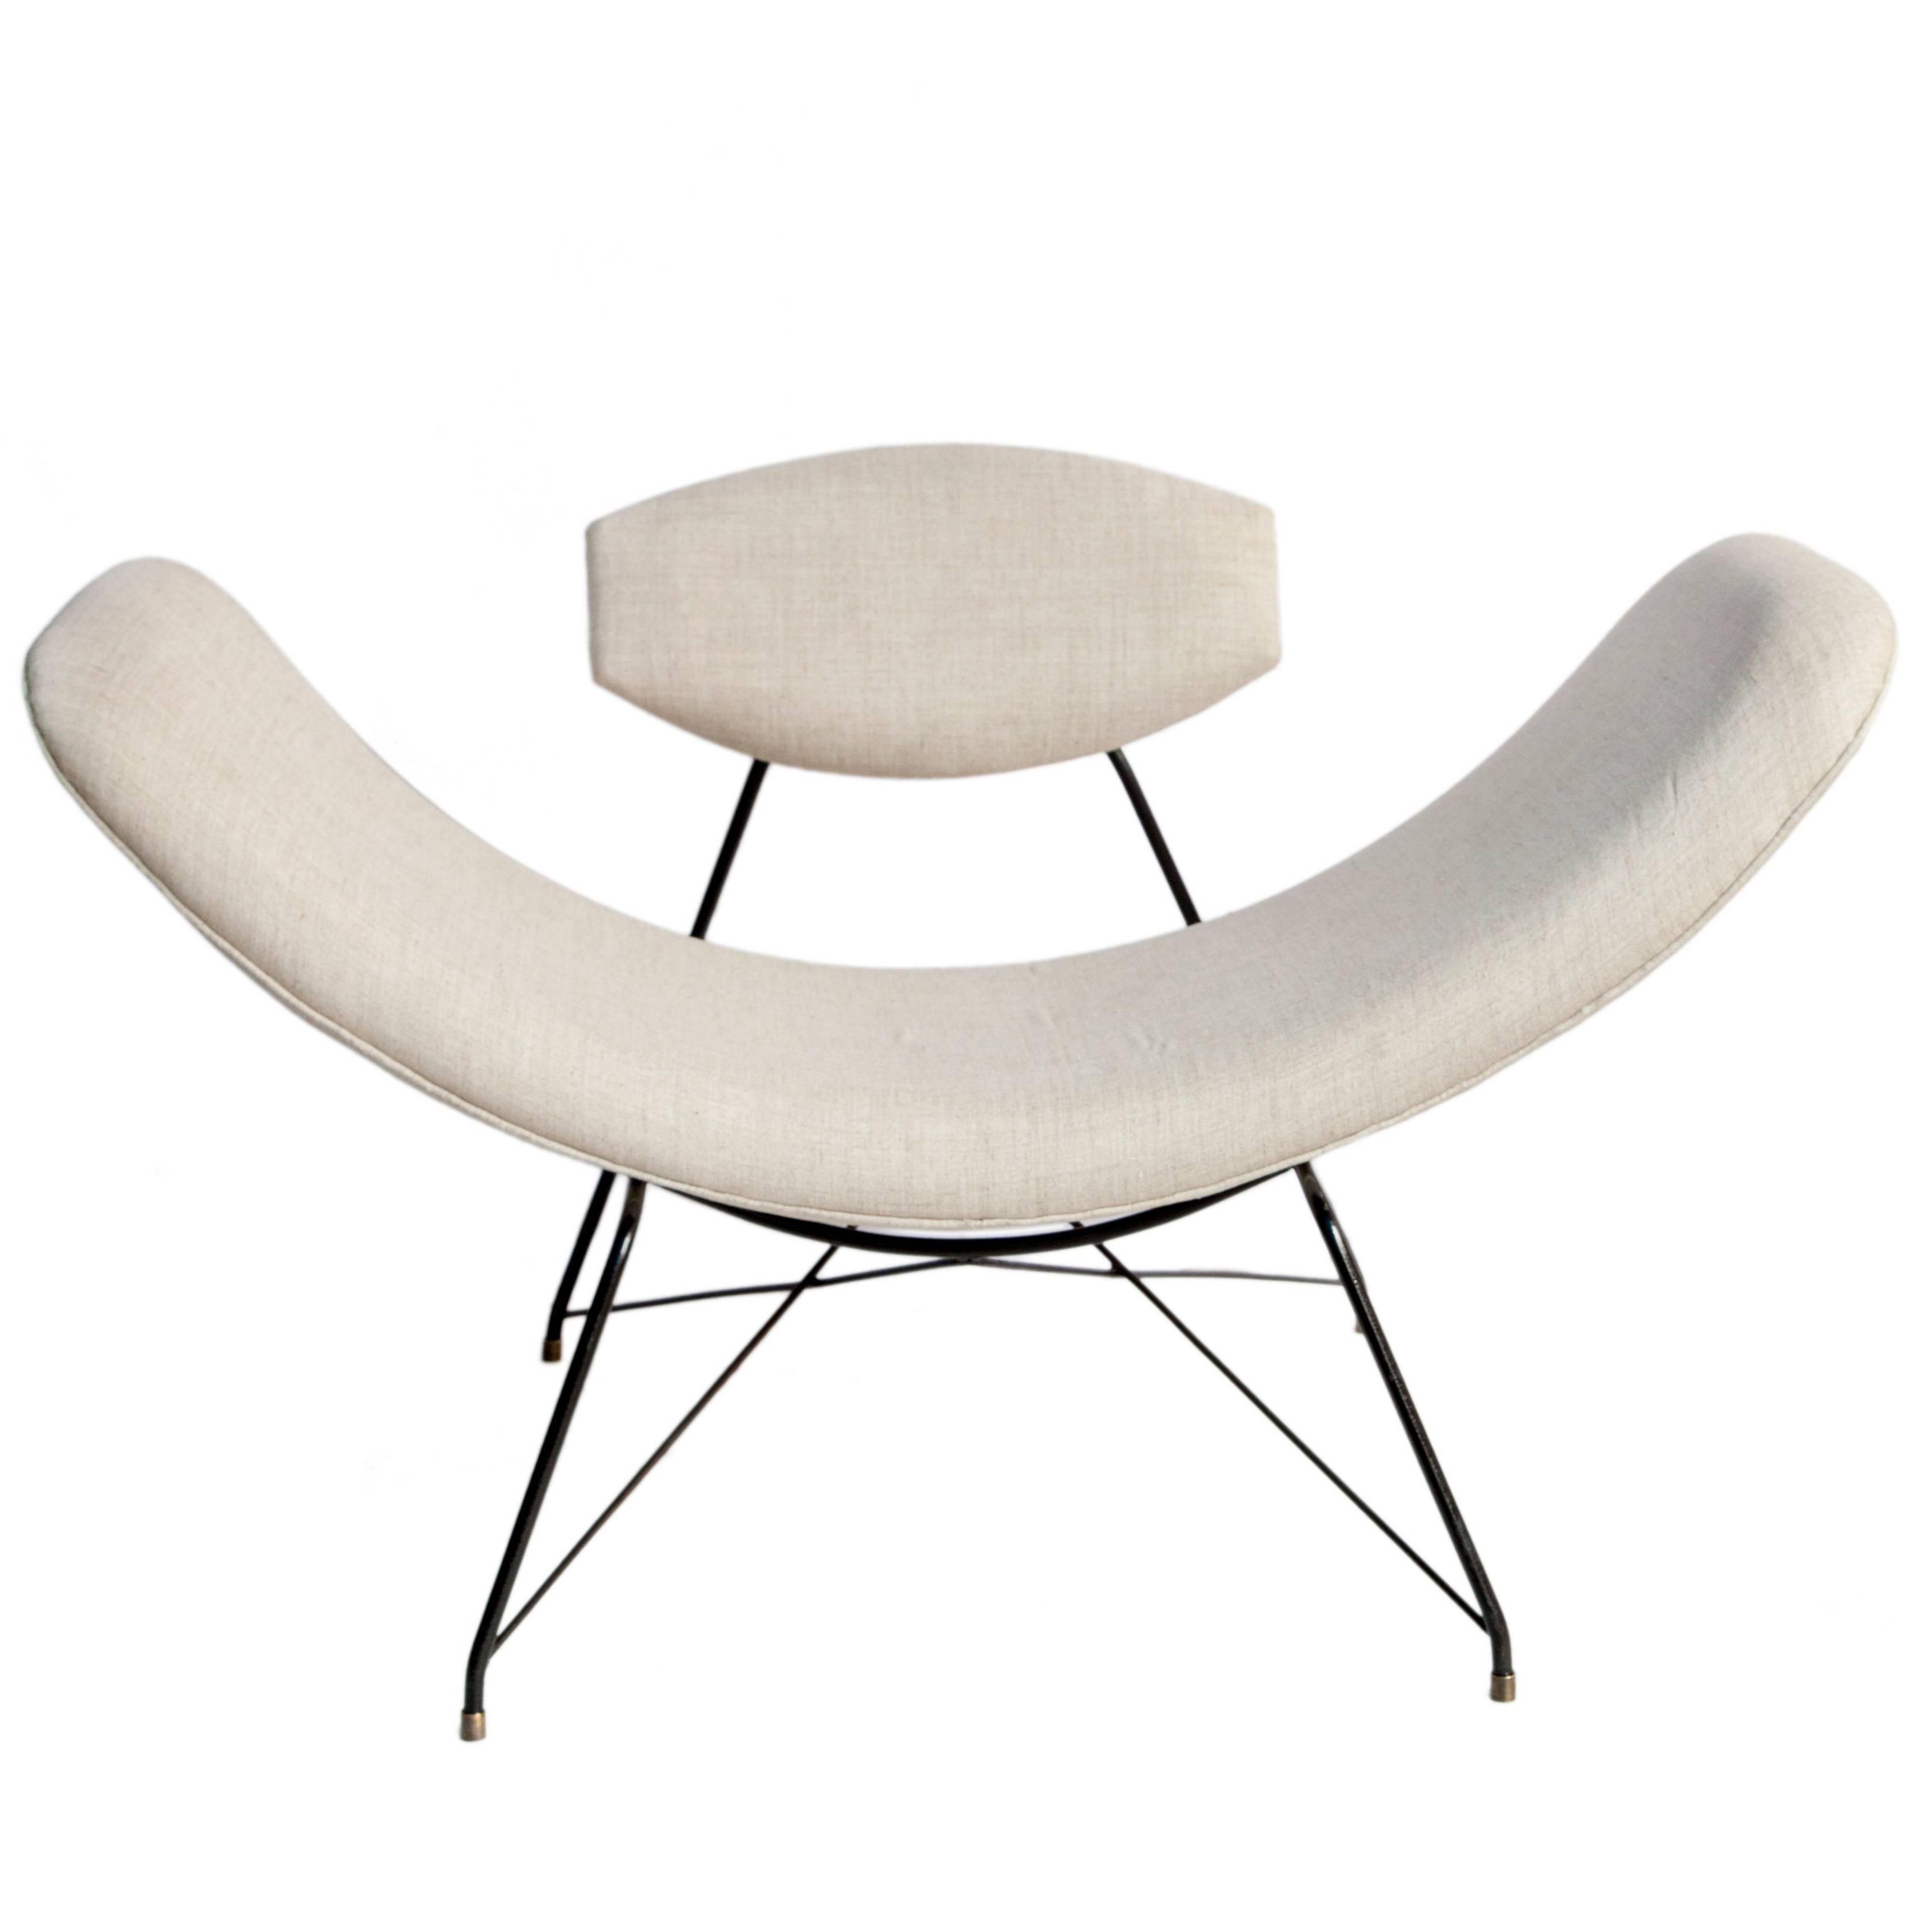 Martin Eisler & Carlo Hauner Brazilian Modern Reversible Chair